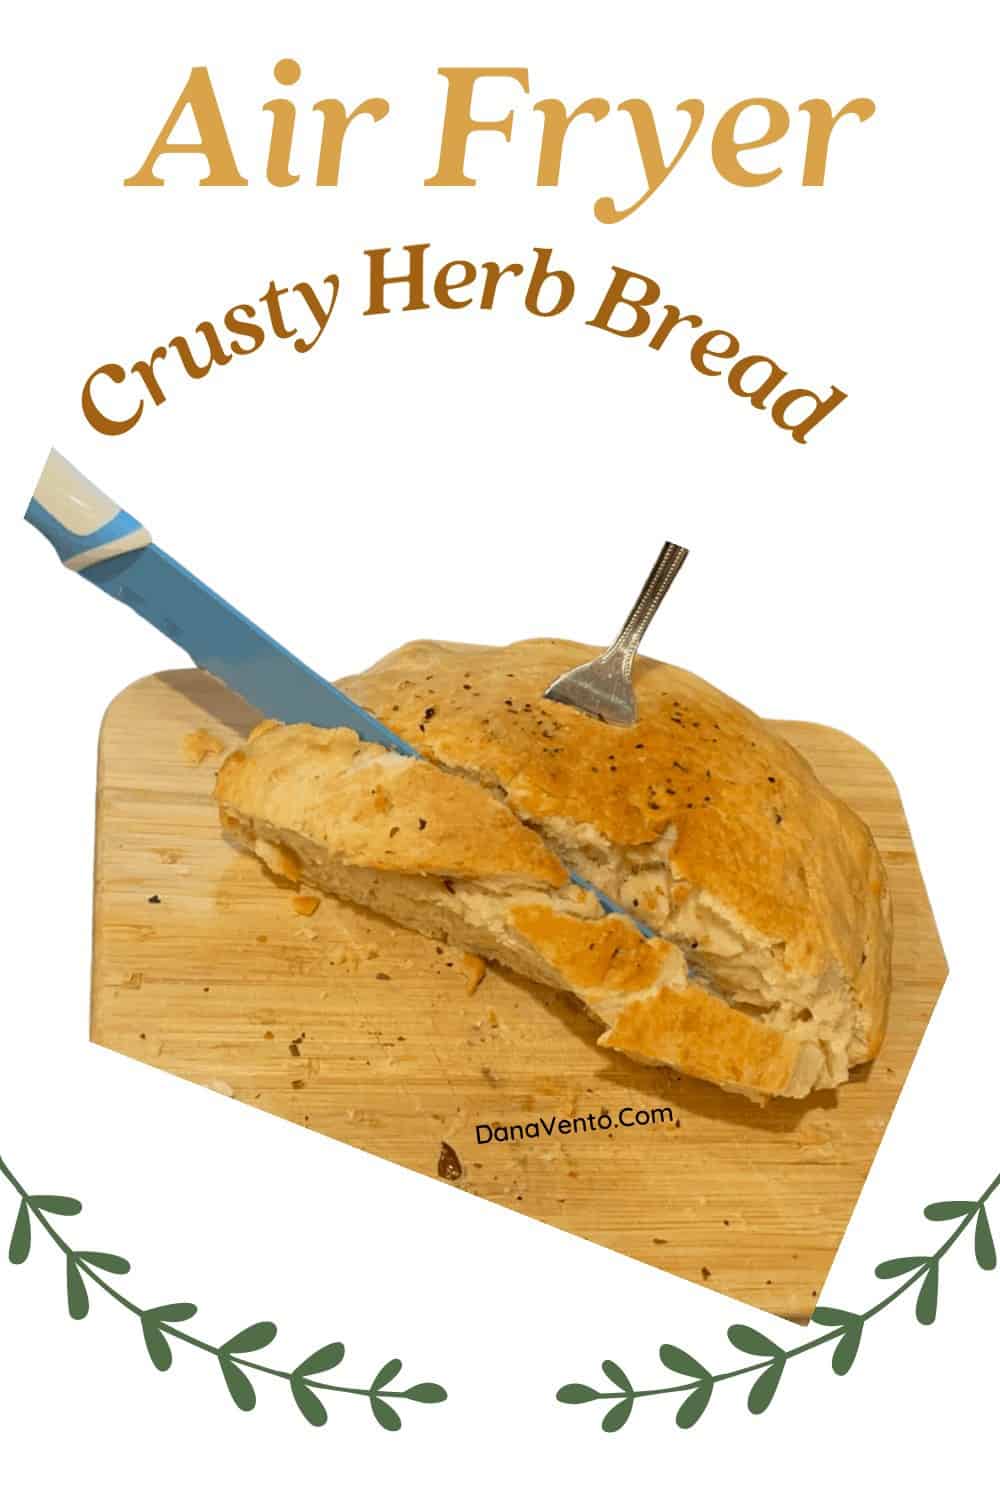 Bread with Knife In It's Crusty Crust